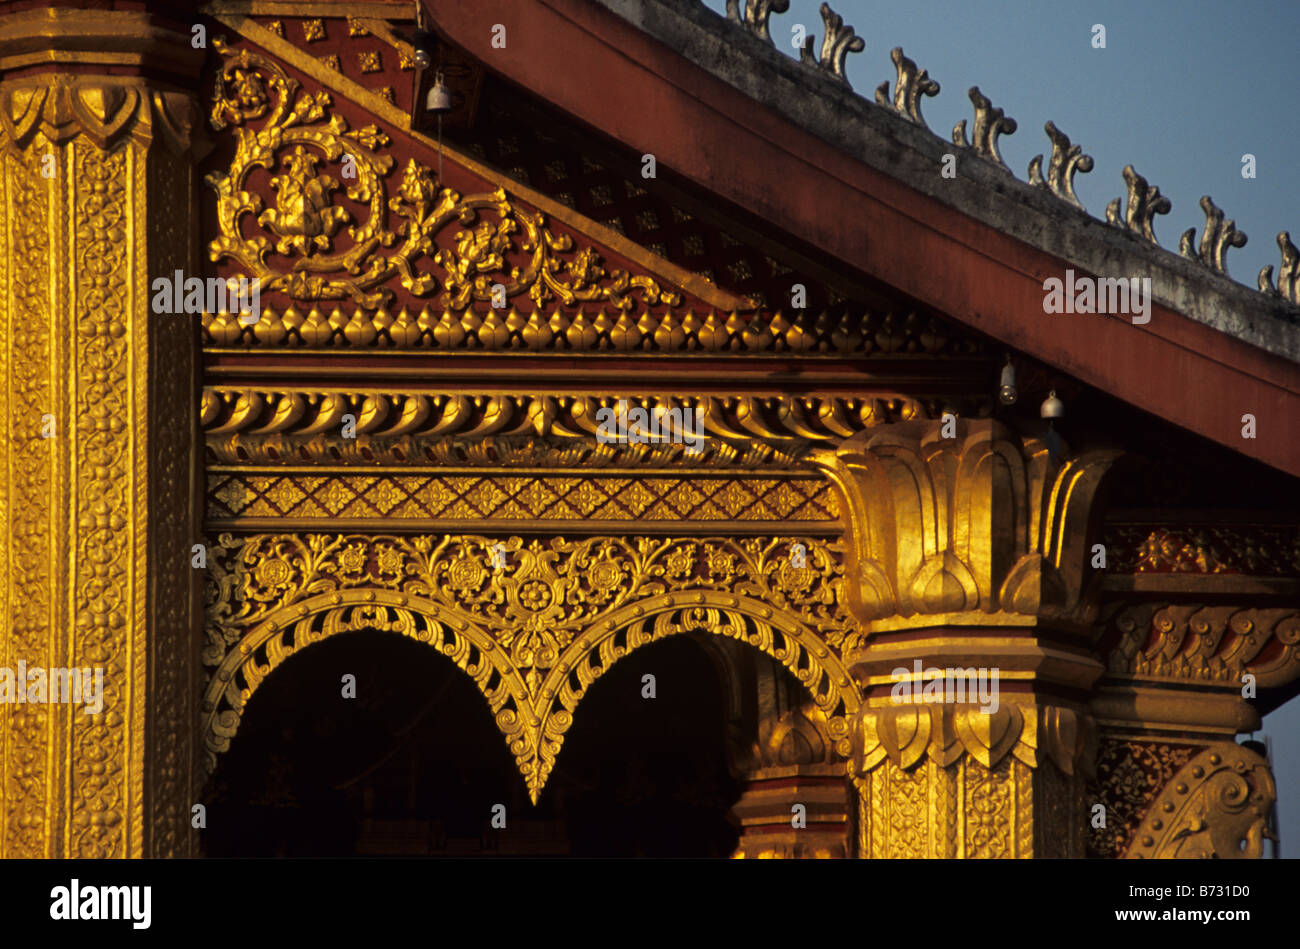 Golden Columns and Decorated East Facade of Wat Saen Buddhist Temple (1718), Luang Prabang, Laos Stock Photo